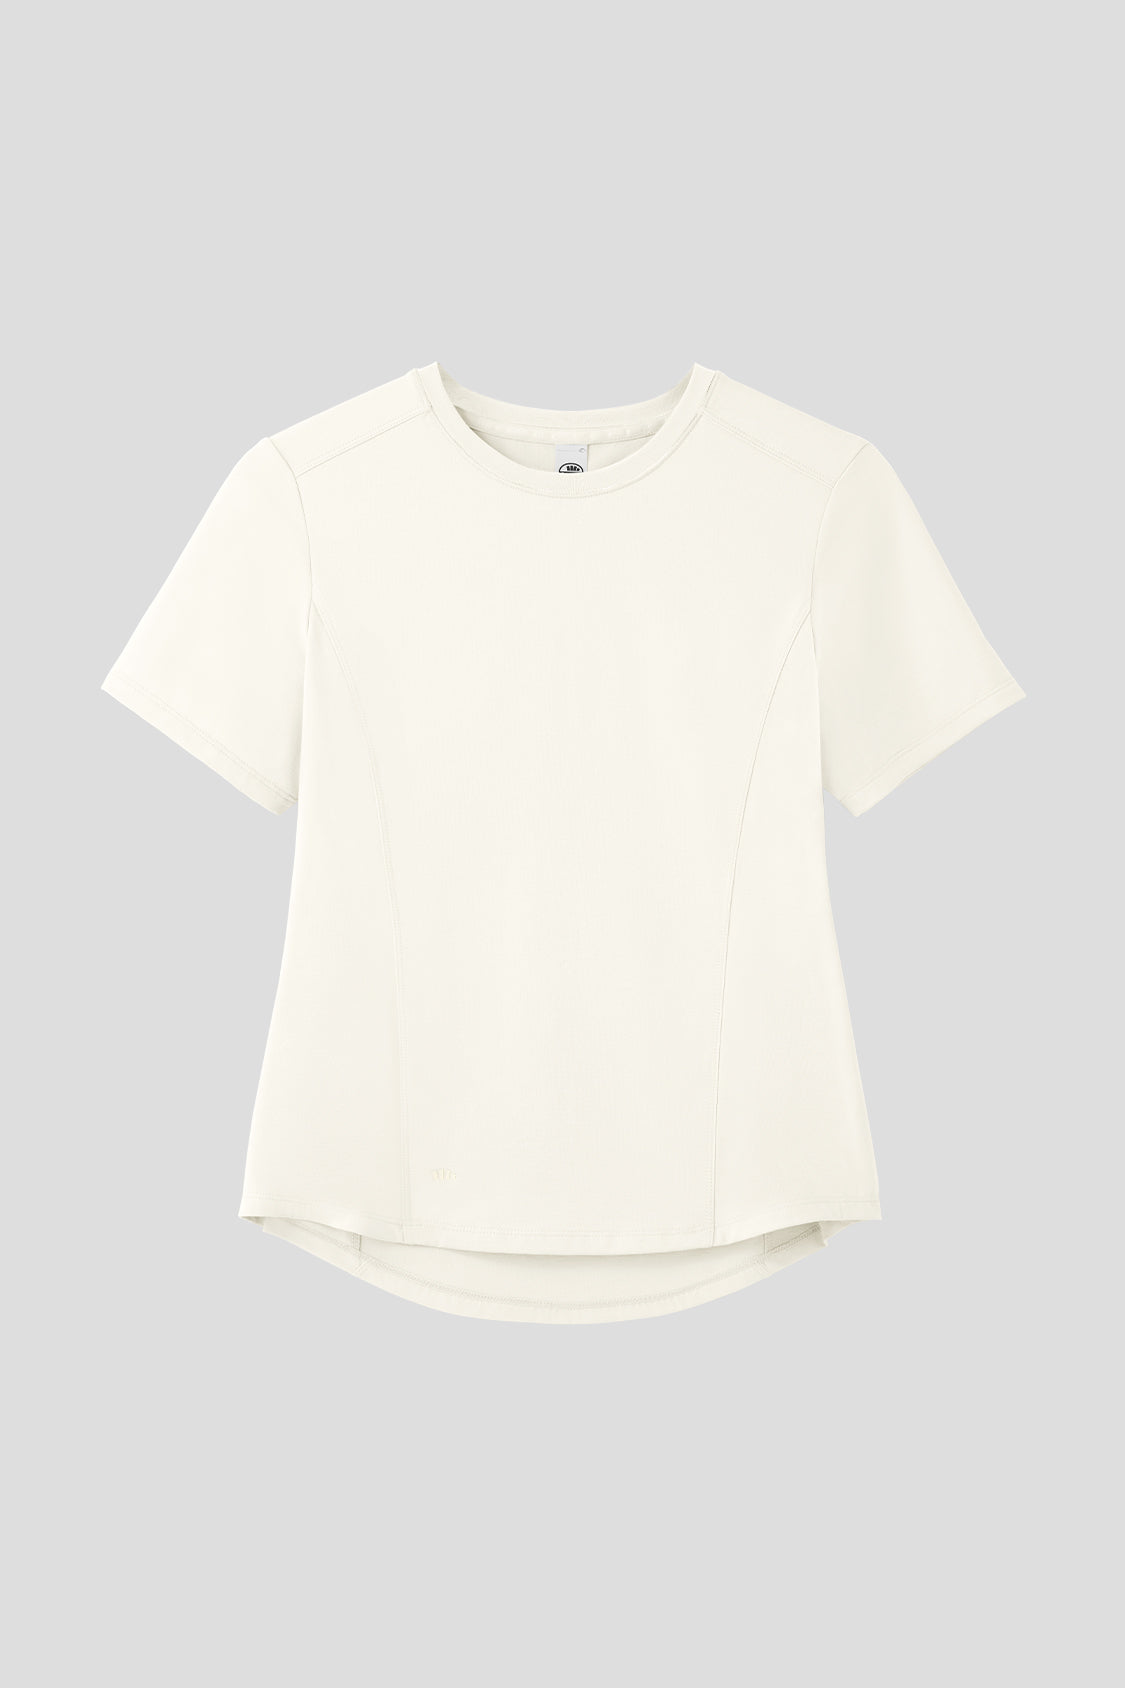 beneunder women's tops t-shirts #color_coconut white